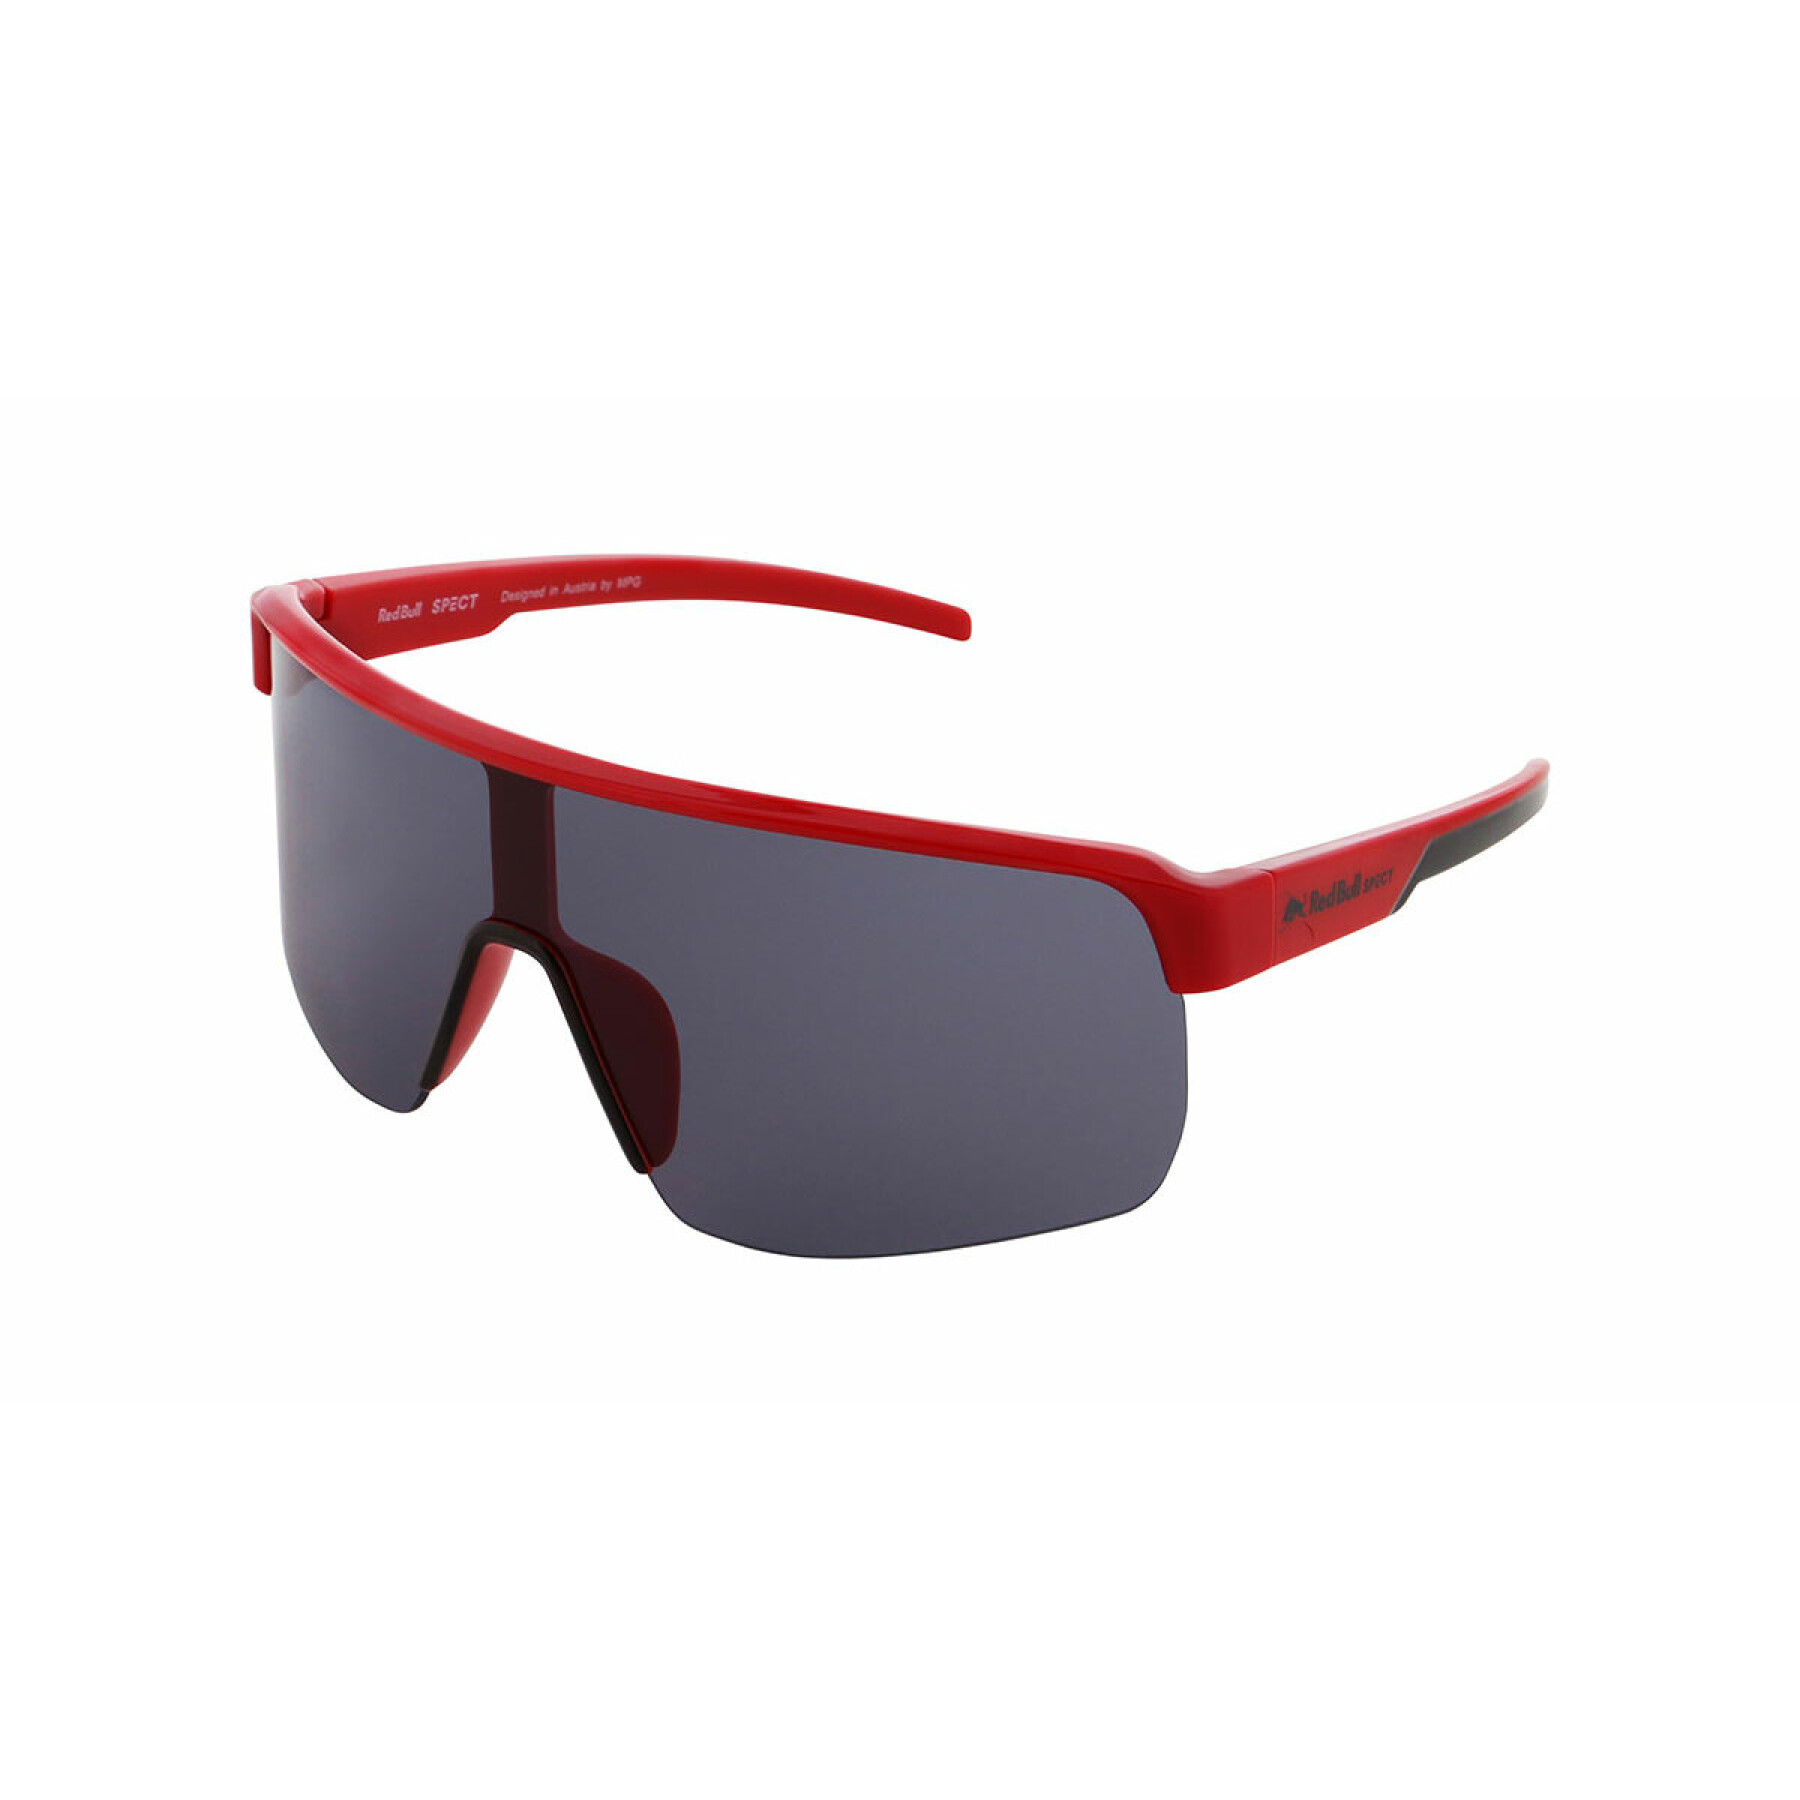 Sunglasses Redbull Spect Eyewear Dakota-005